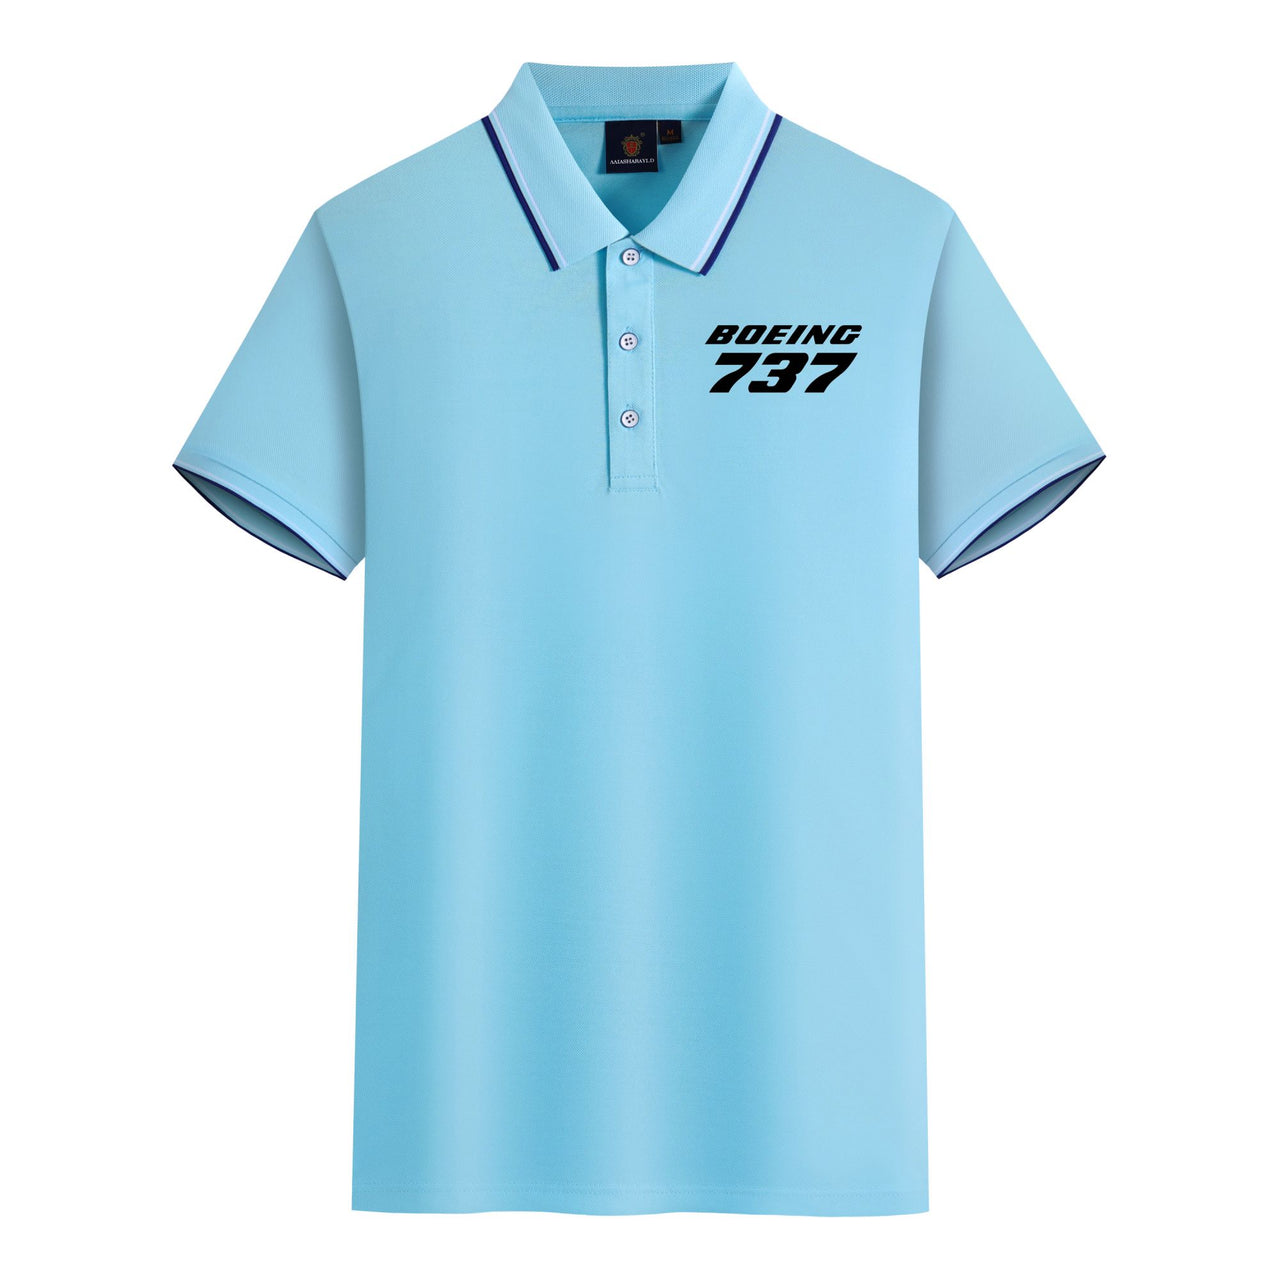 Boeing 737 & Text Designed Stylish Polo T-Shirts